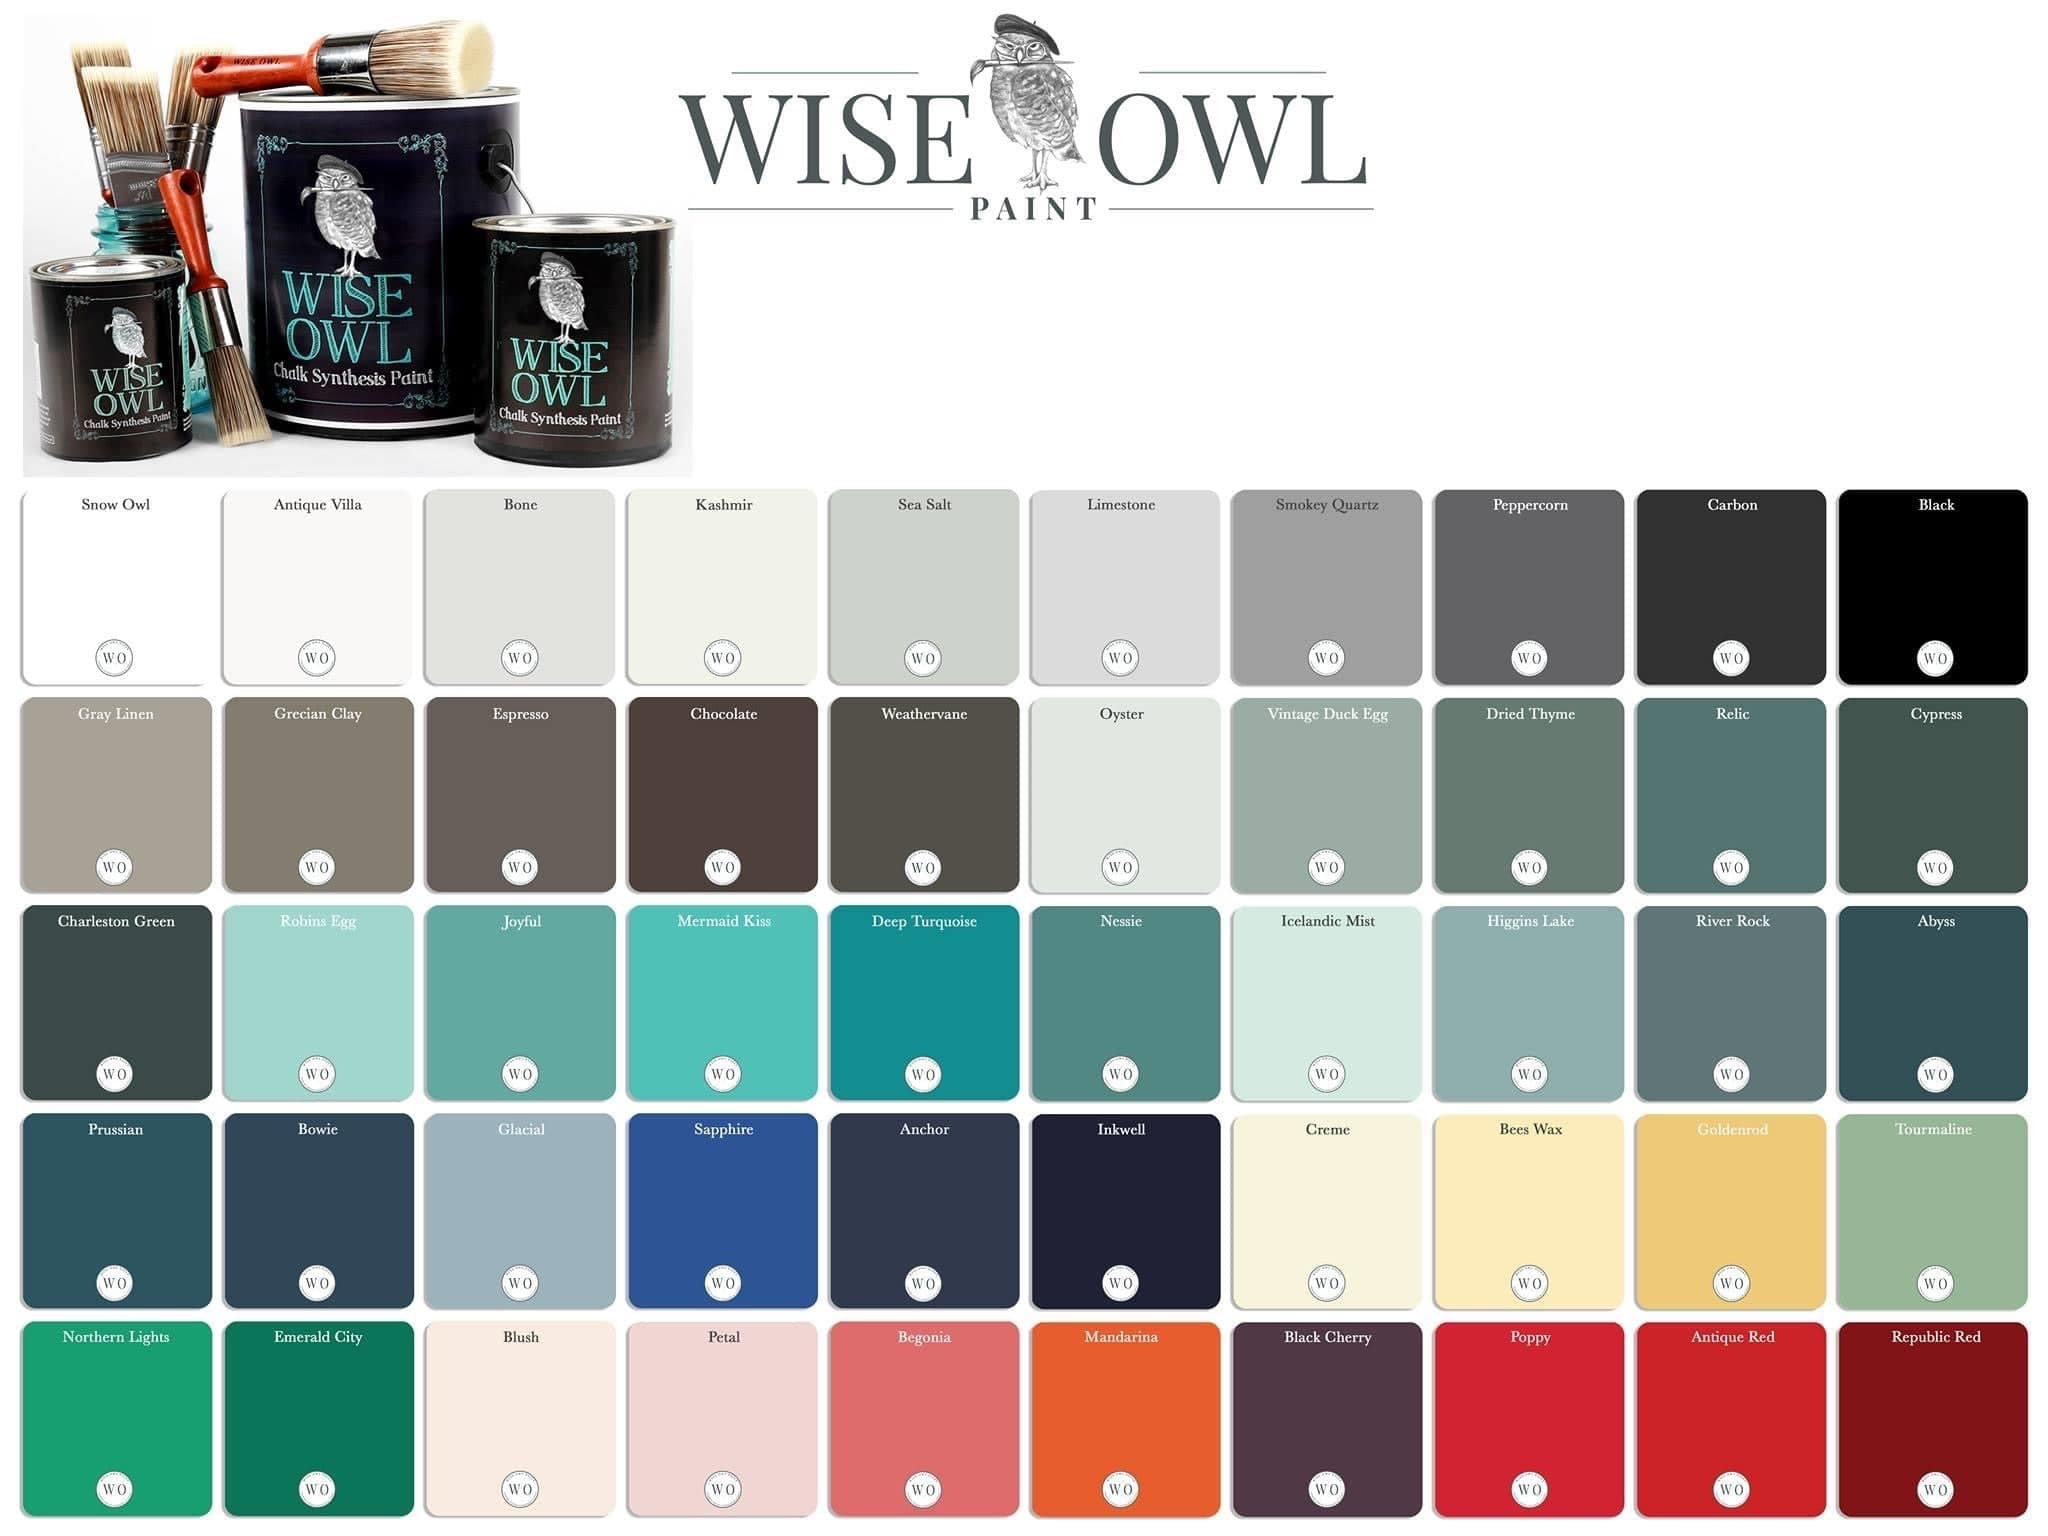 Wise Owl Paint Chalk Synthesis Paint Pints (16 oz)